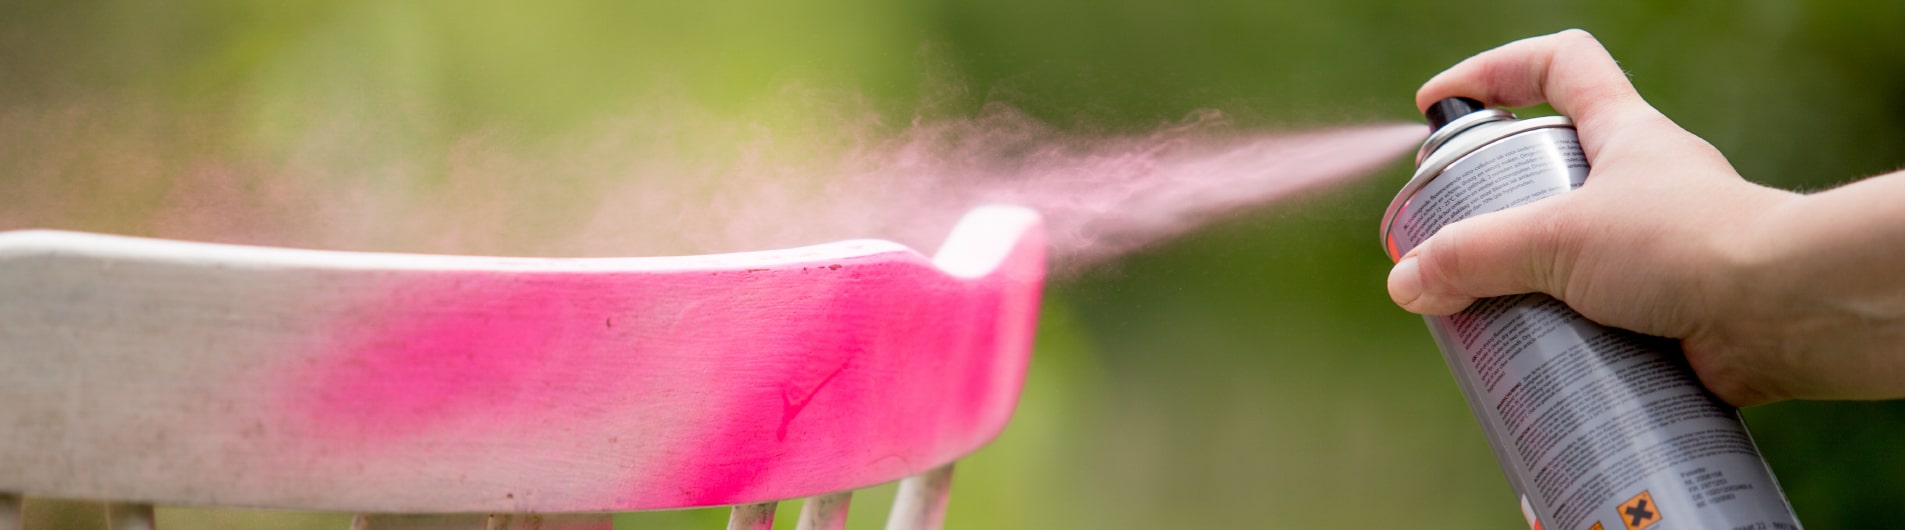 Guide) DIY Spraymaling Læs mere online hos Decofarver »